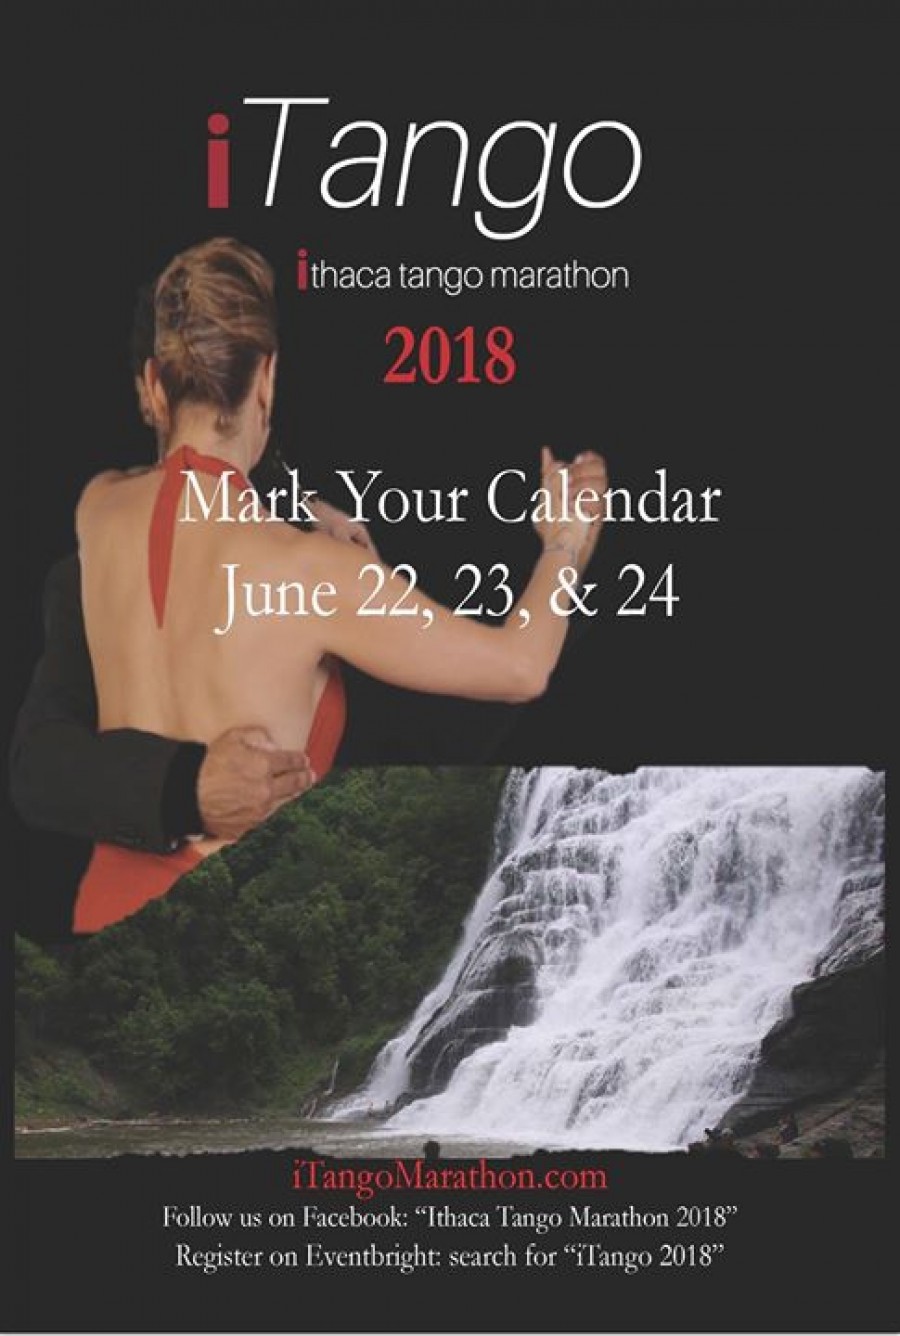 Ithaca Tango Marathon